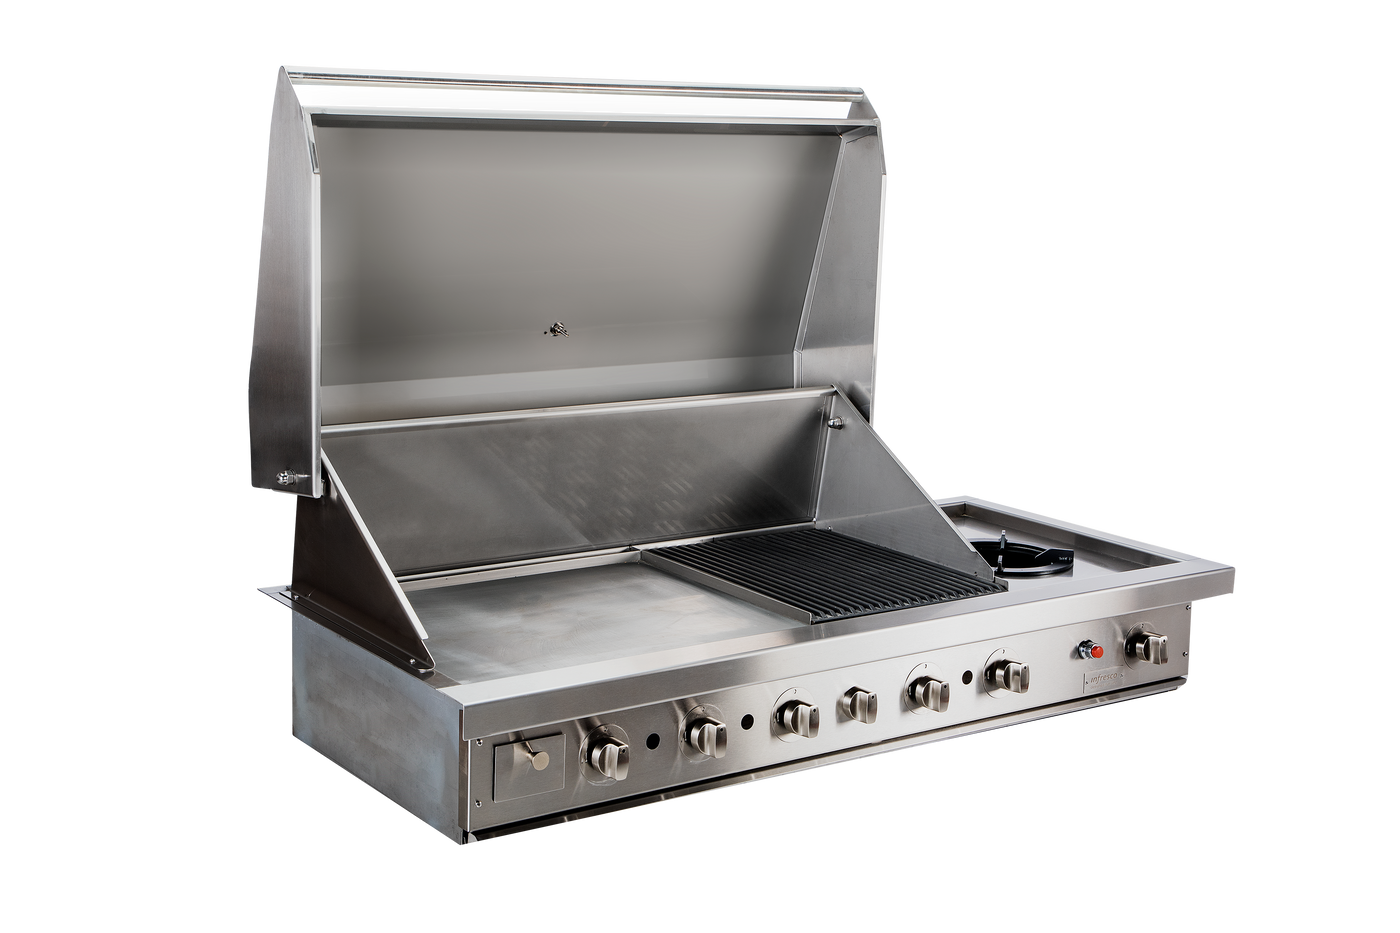 Infresco 1360mm Barbecue - 600mm Hotplate/ 400mm Grill/ 25 Megajoule Wok